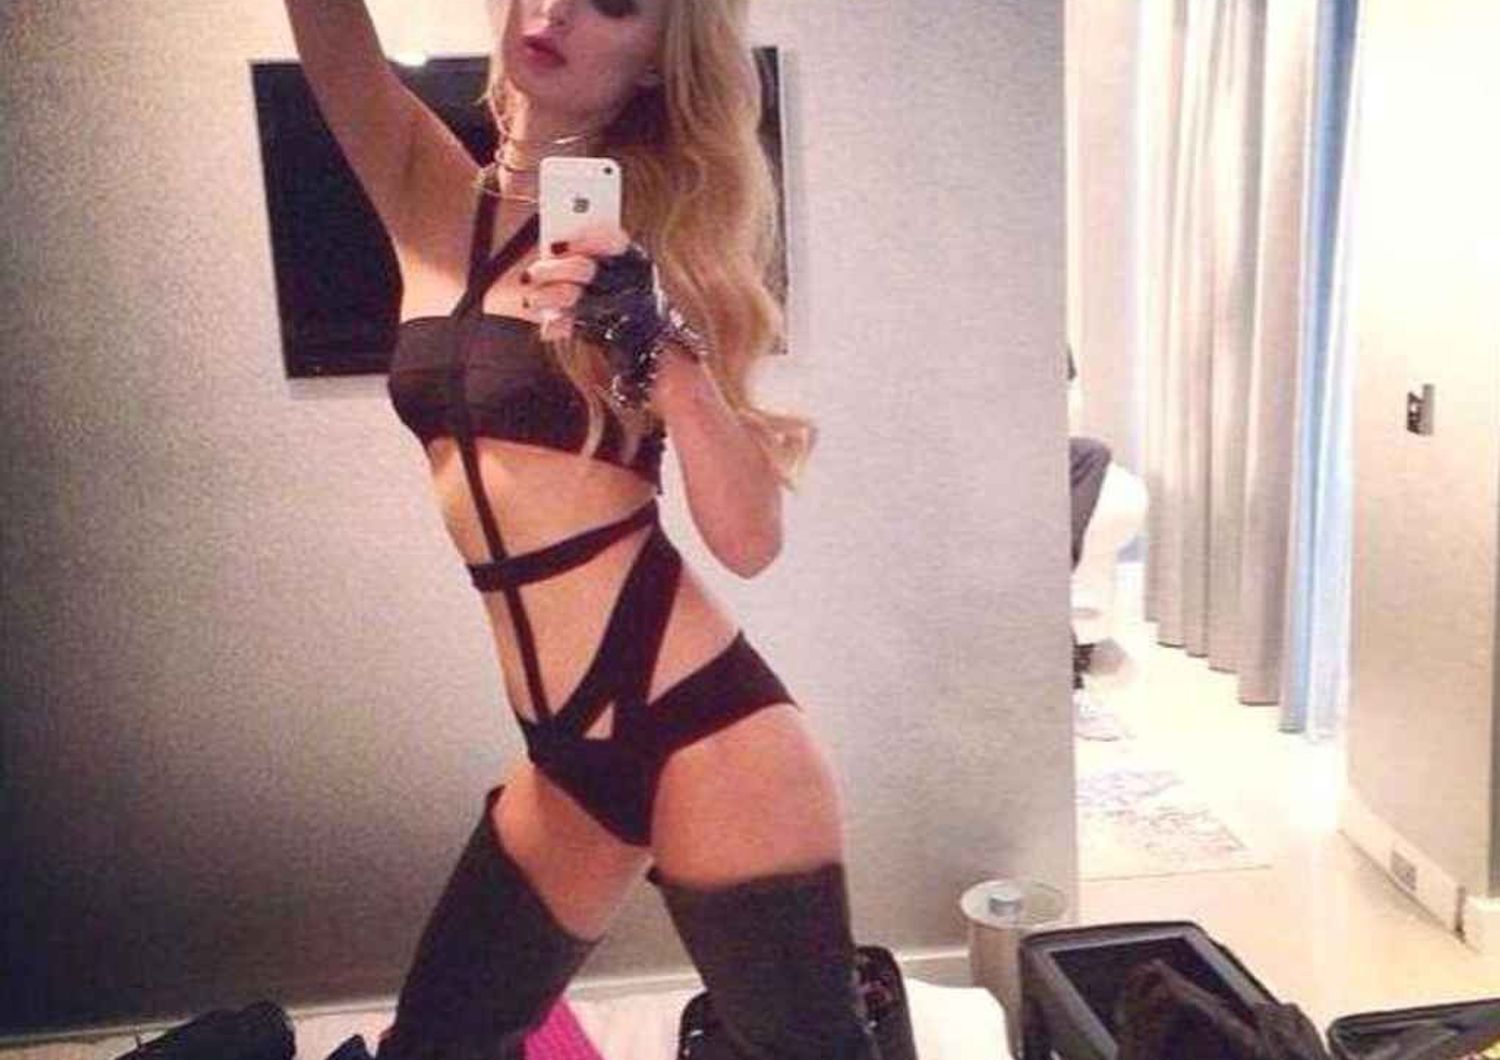 Paris Hilton sexy dominatrice, foto su Instagram e #SexySelfie su Twitter